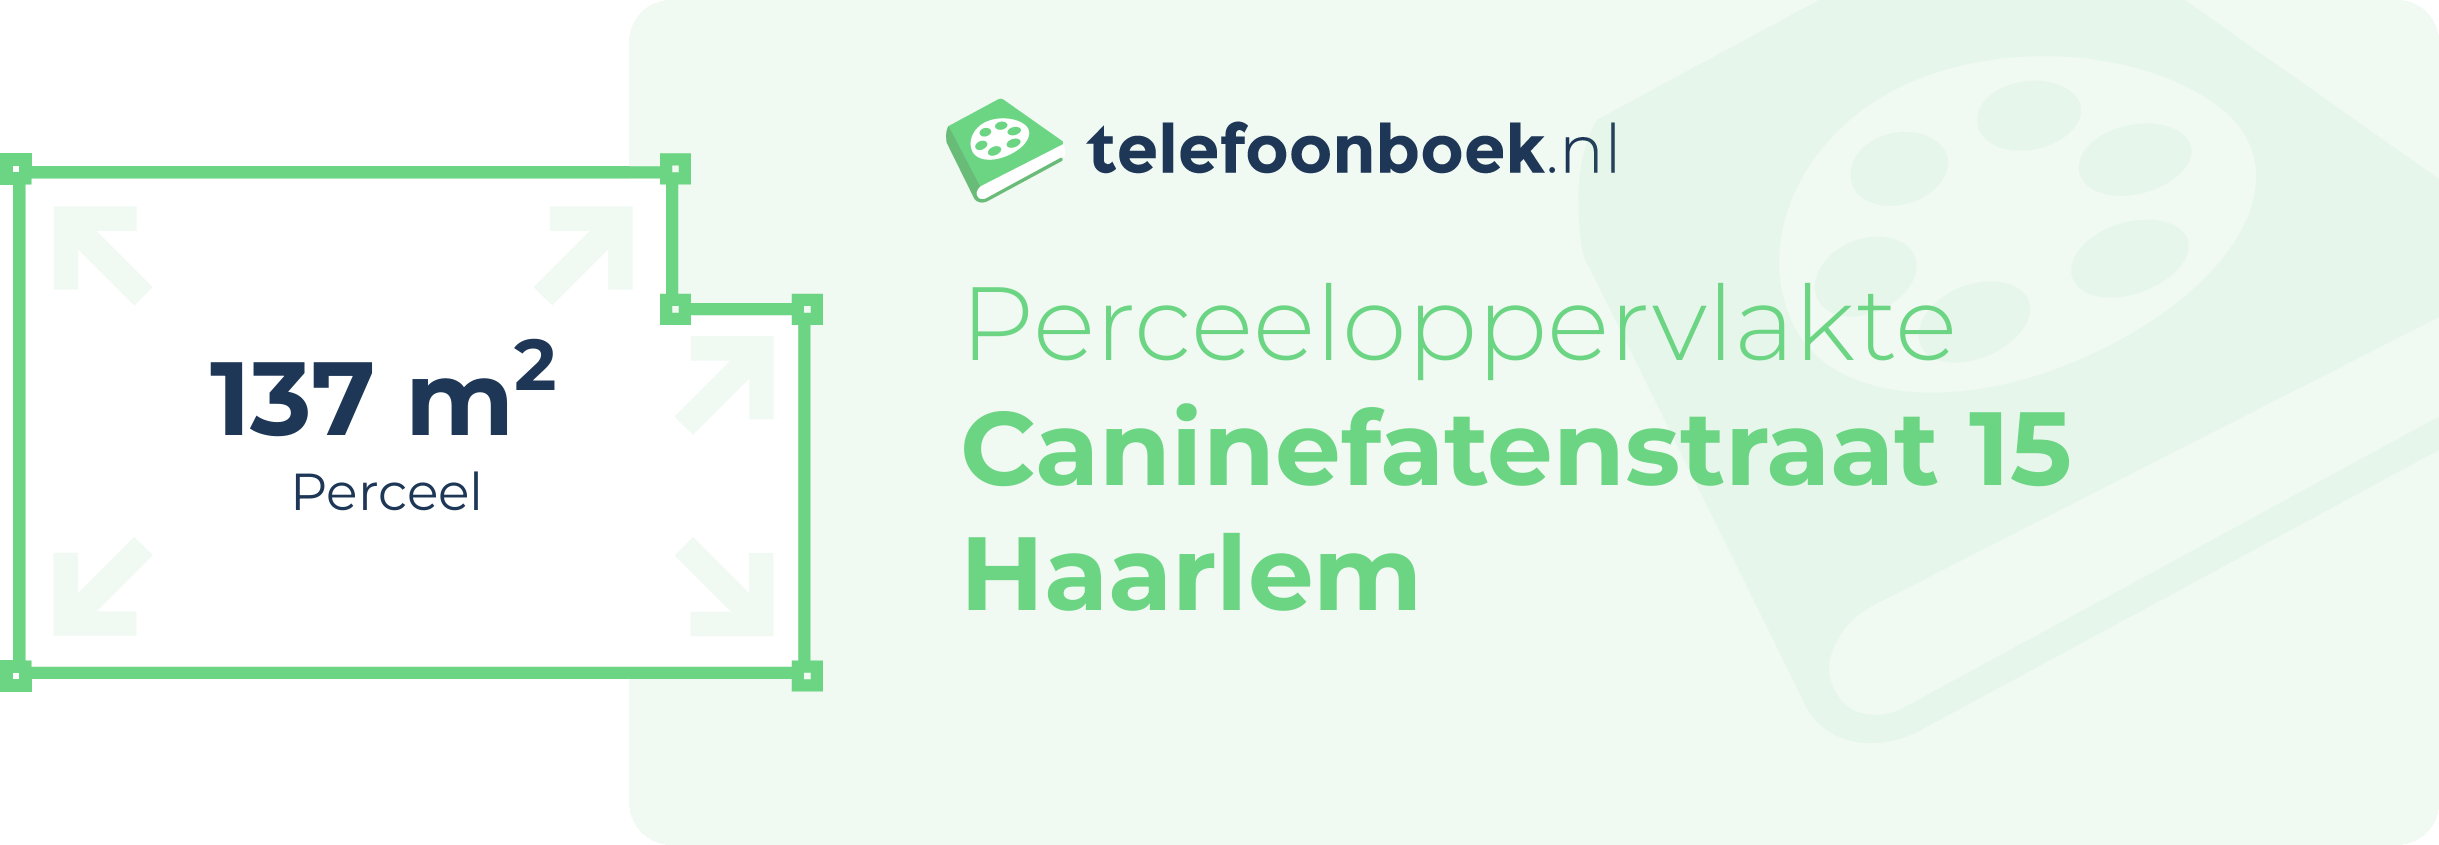 Perceeloppervlakte Caninefatenstraat 15 Haarlem